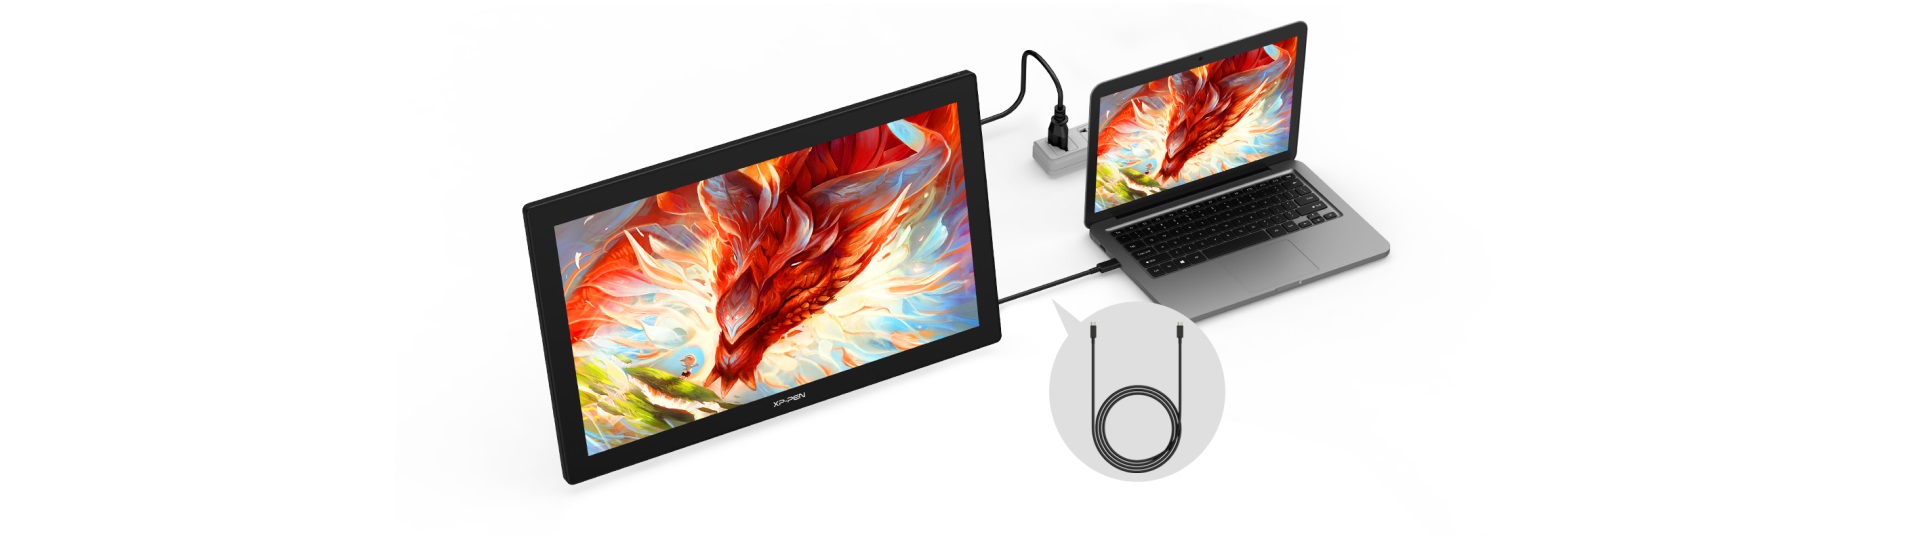 Xp-Pen Artist 24 tablet graficzny z interfejsem USB-c